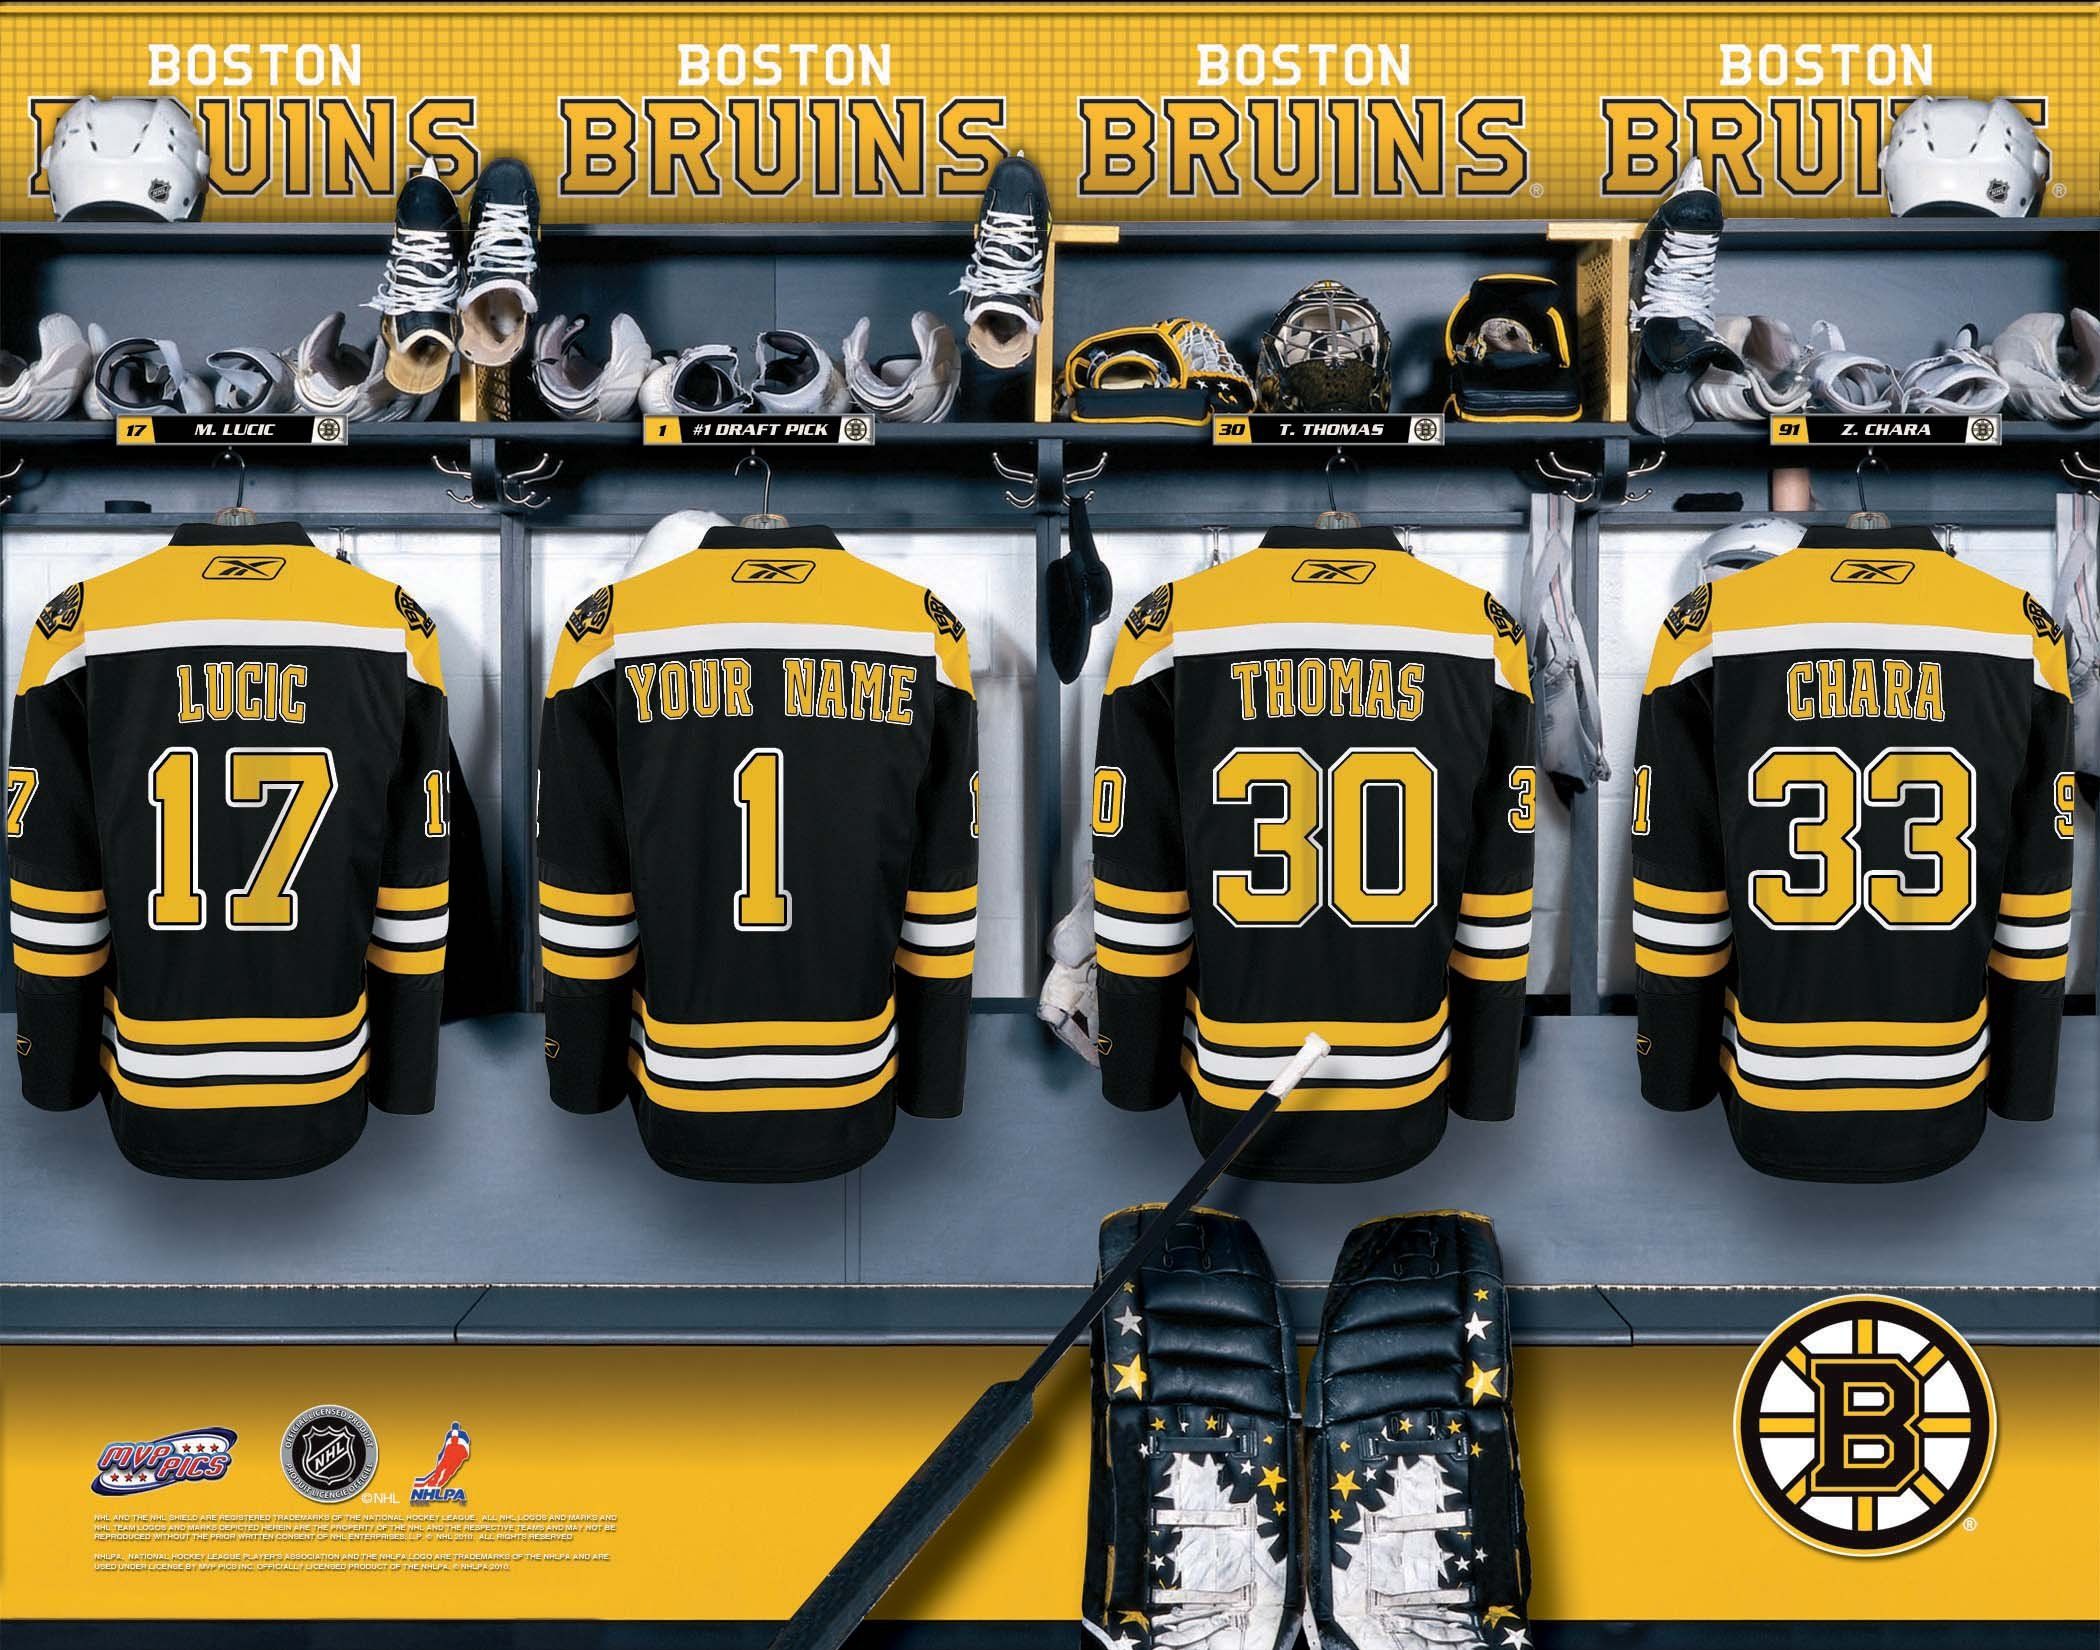 BOSTON BRUINS nhl hockey 20 wallpaper 2100x1650 336461